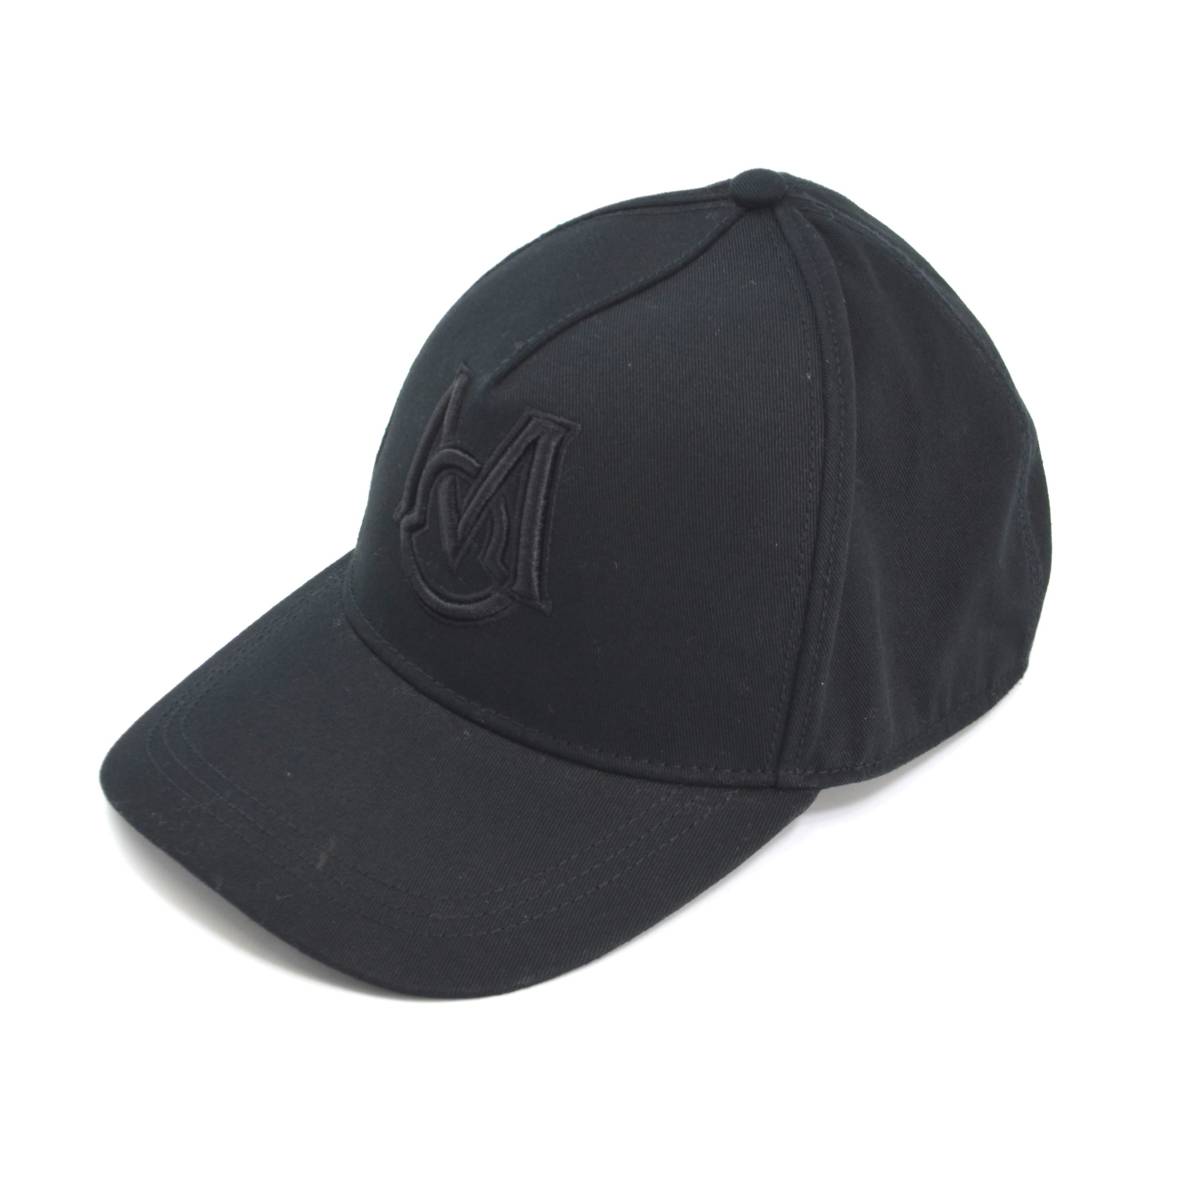 H 1円スタート モンクレール MONCLER キャップ 刺繍ロゴ ブラック 黒 帽子 ベースボールキャップ メンズの返品方法を画像付きで解説！返品の条件や注意点なども